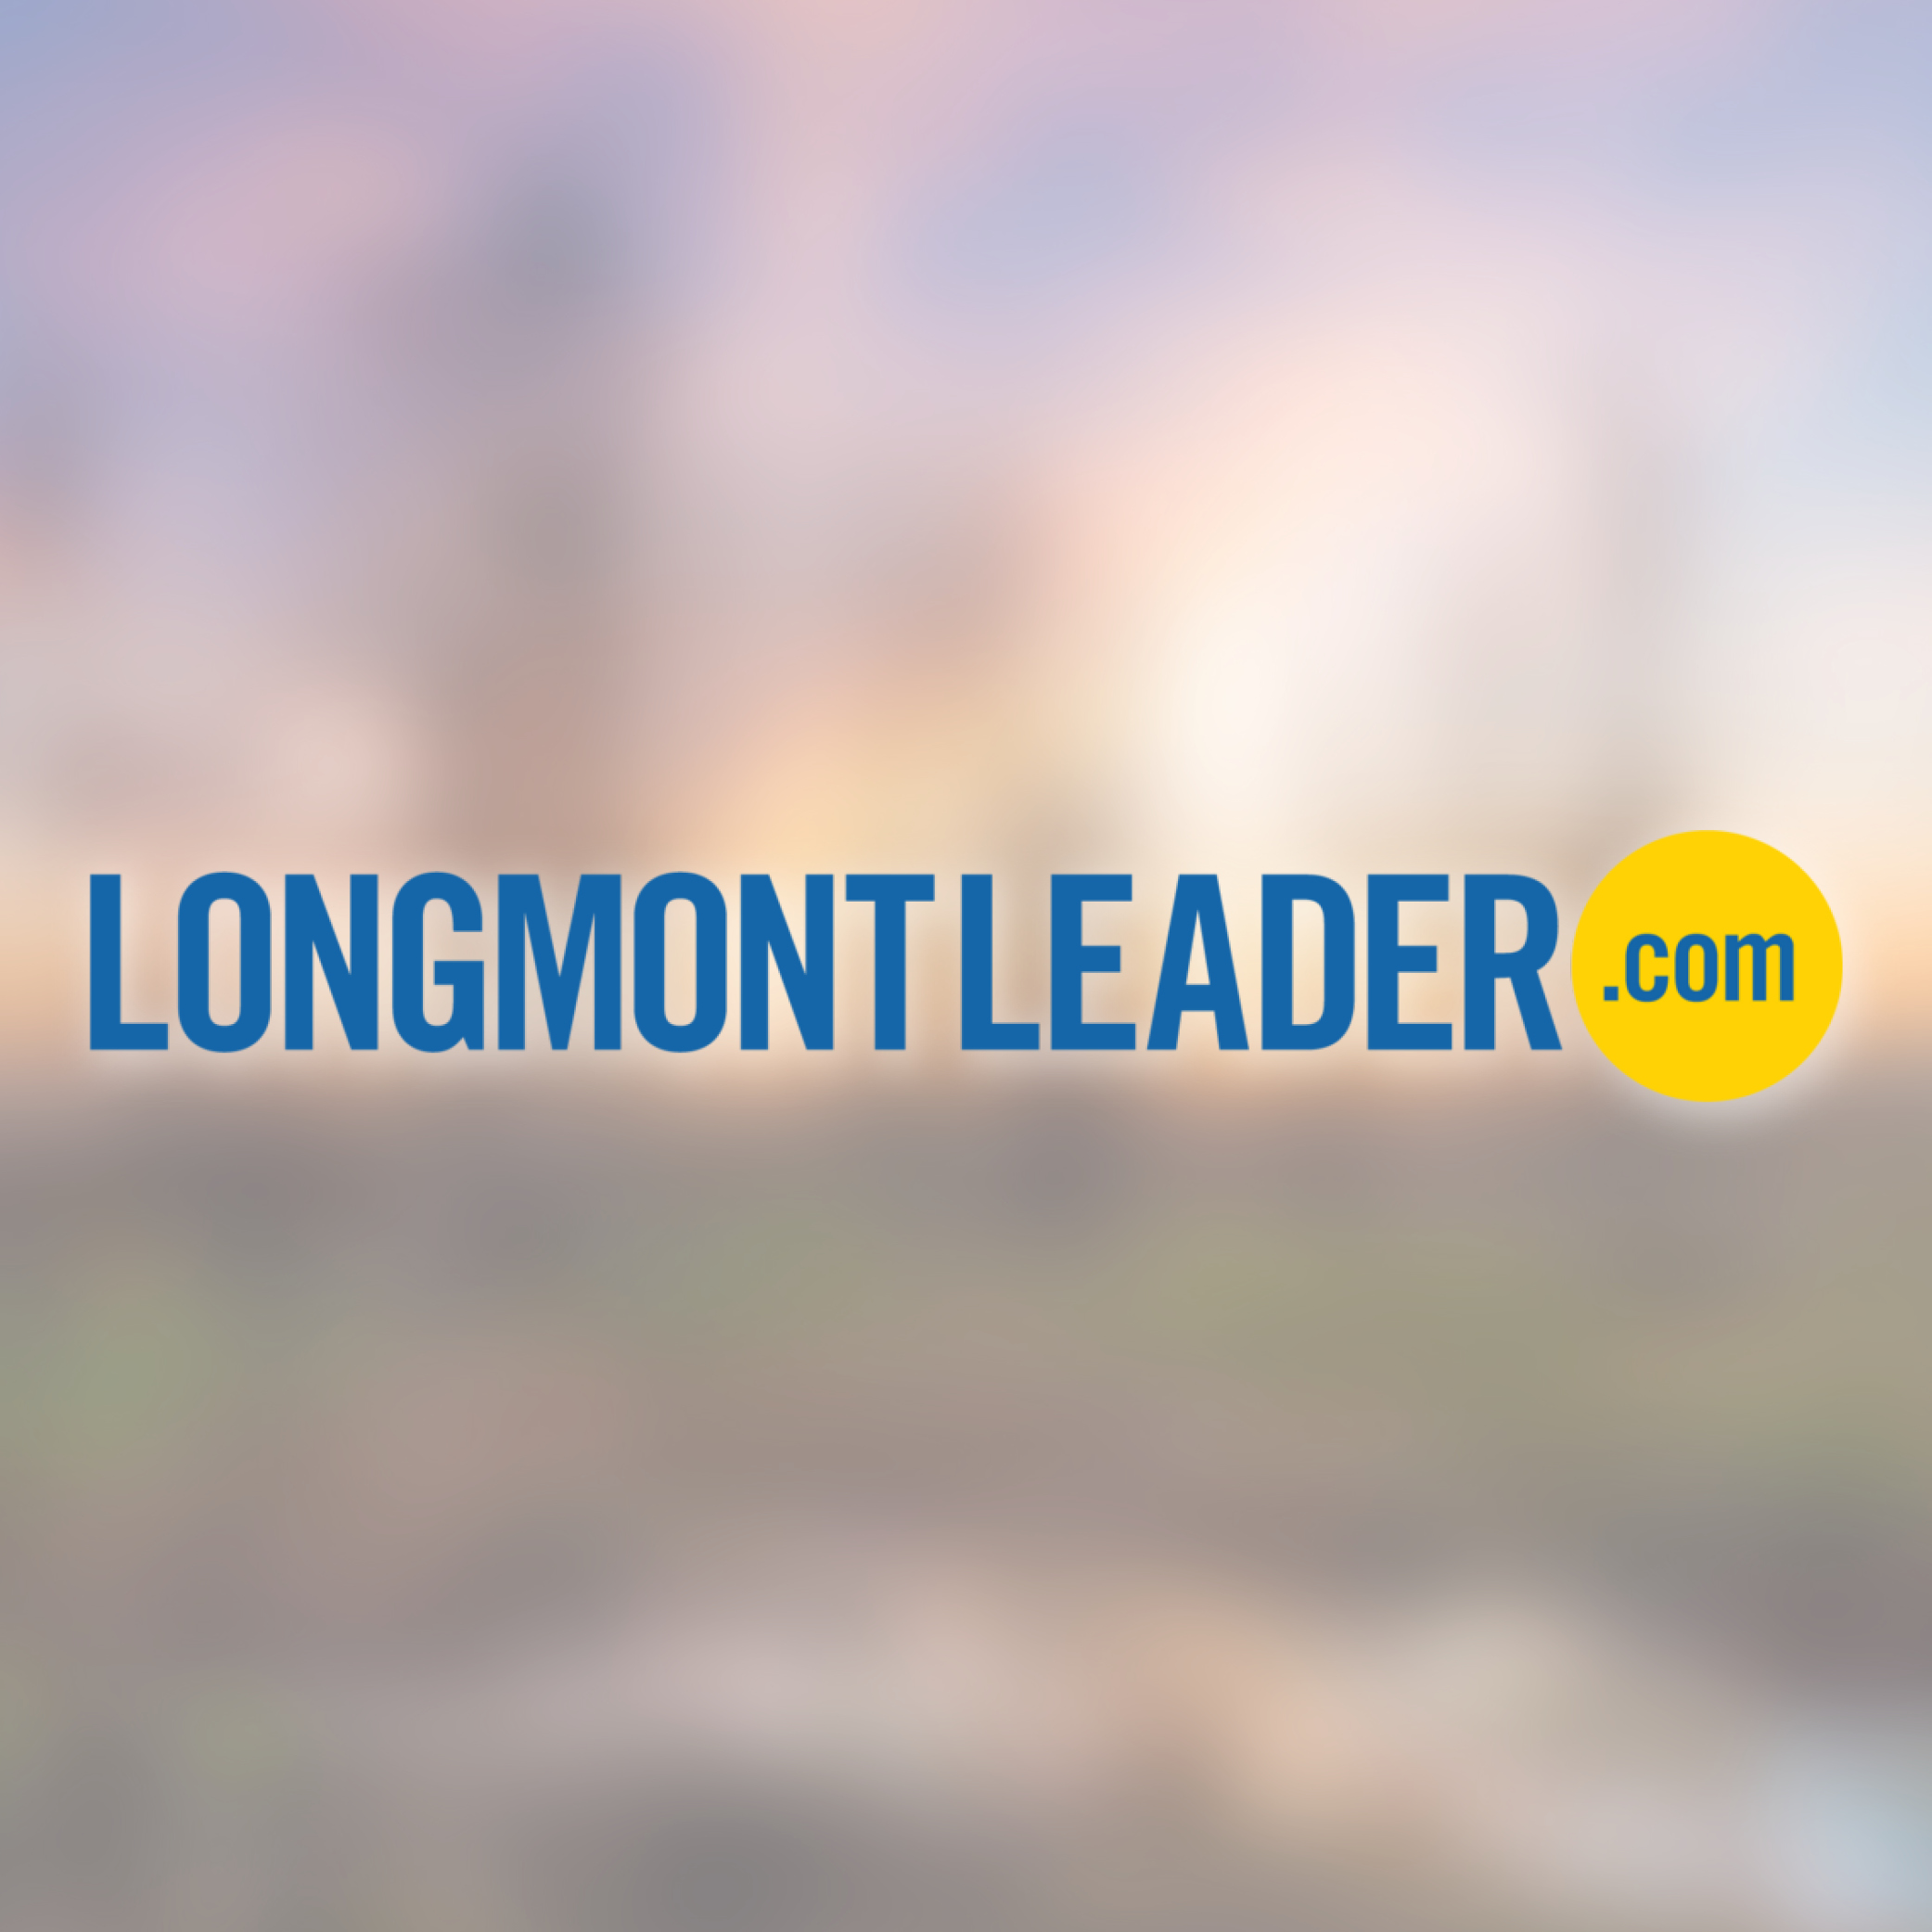 Longmont Leader